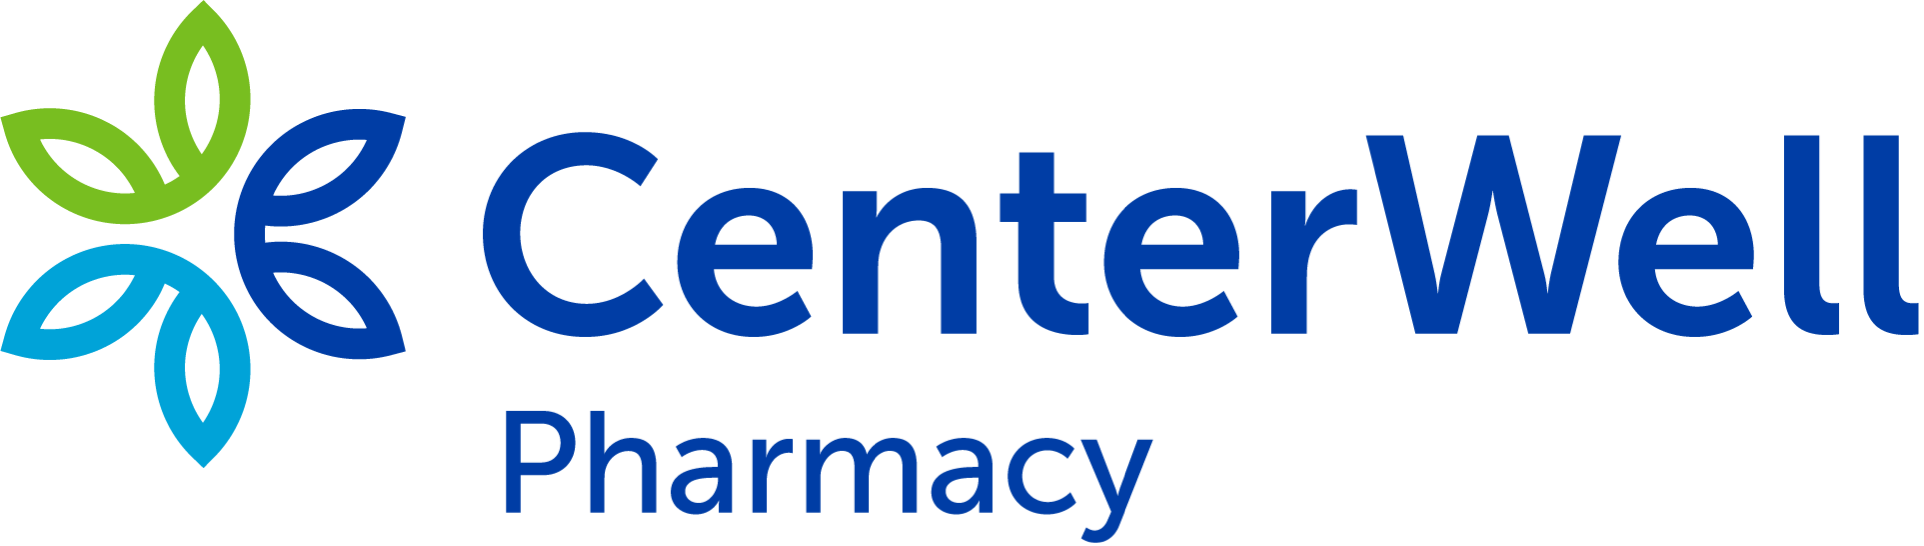 CenterWell Pharmacy logo